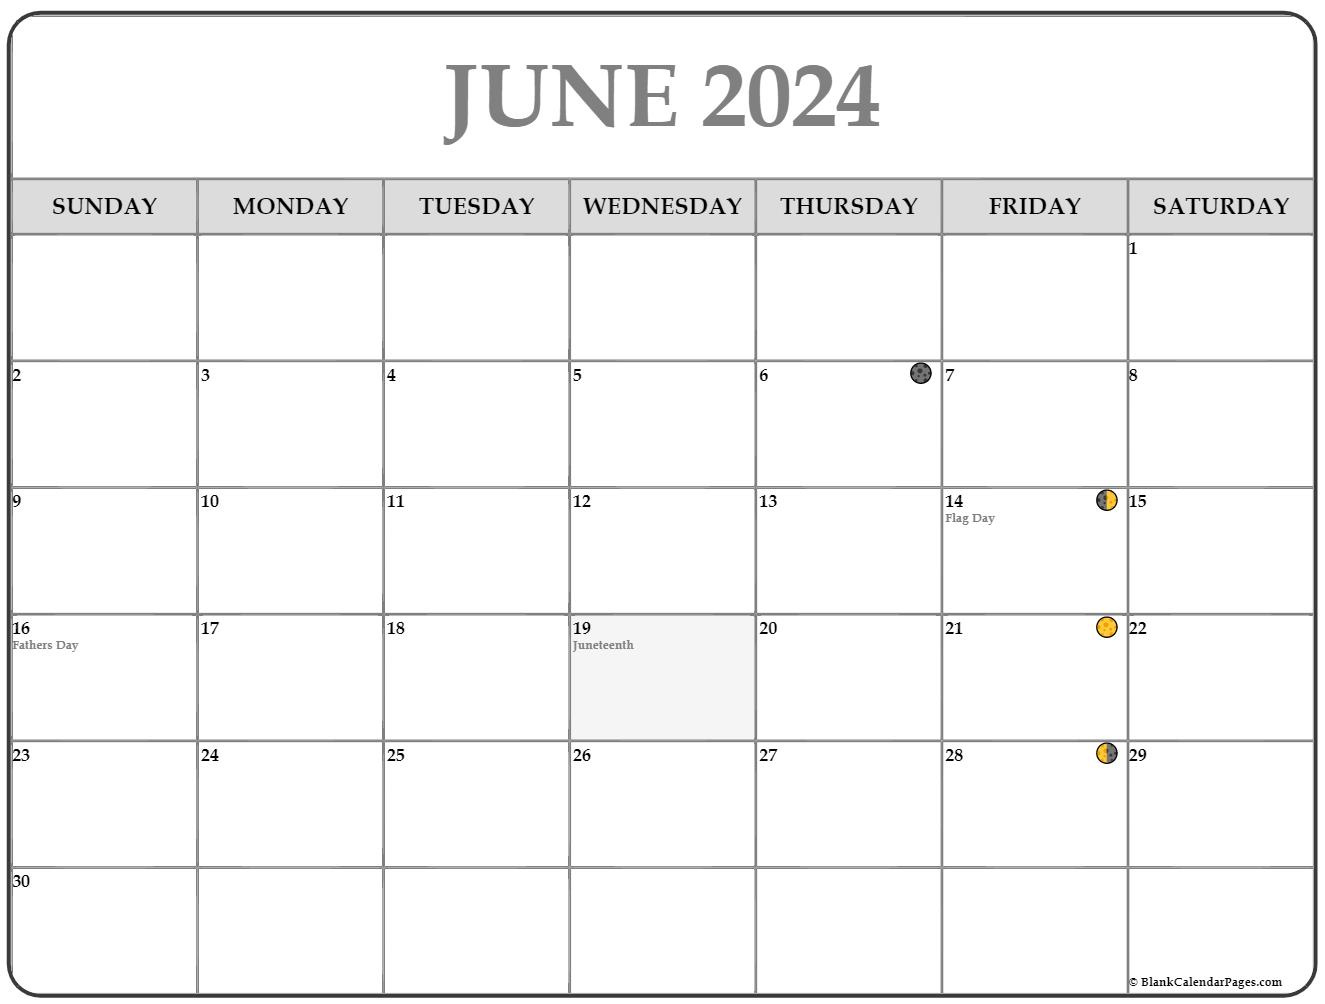 June 2024 Lunar Calendar | Moon Phase Calendar intended for Moon Calendar June 2024